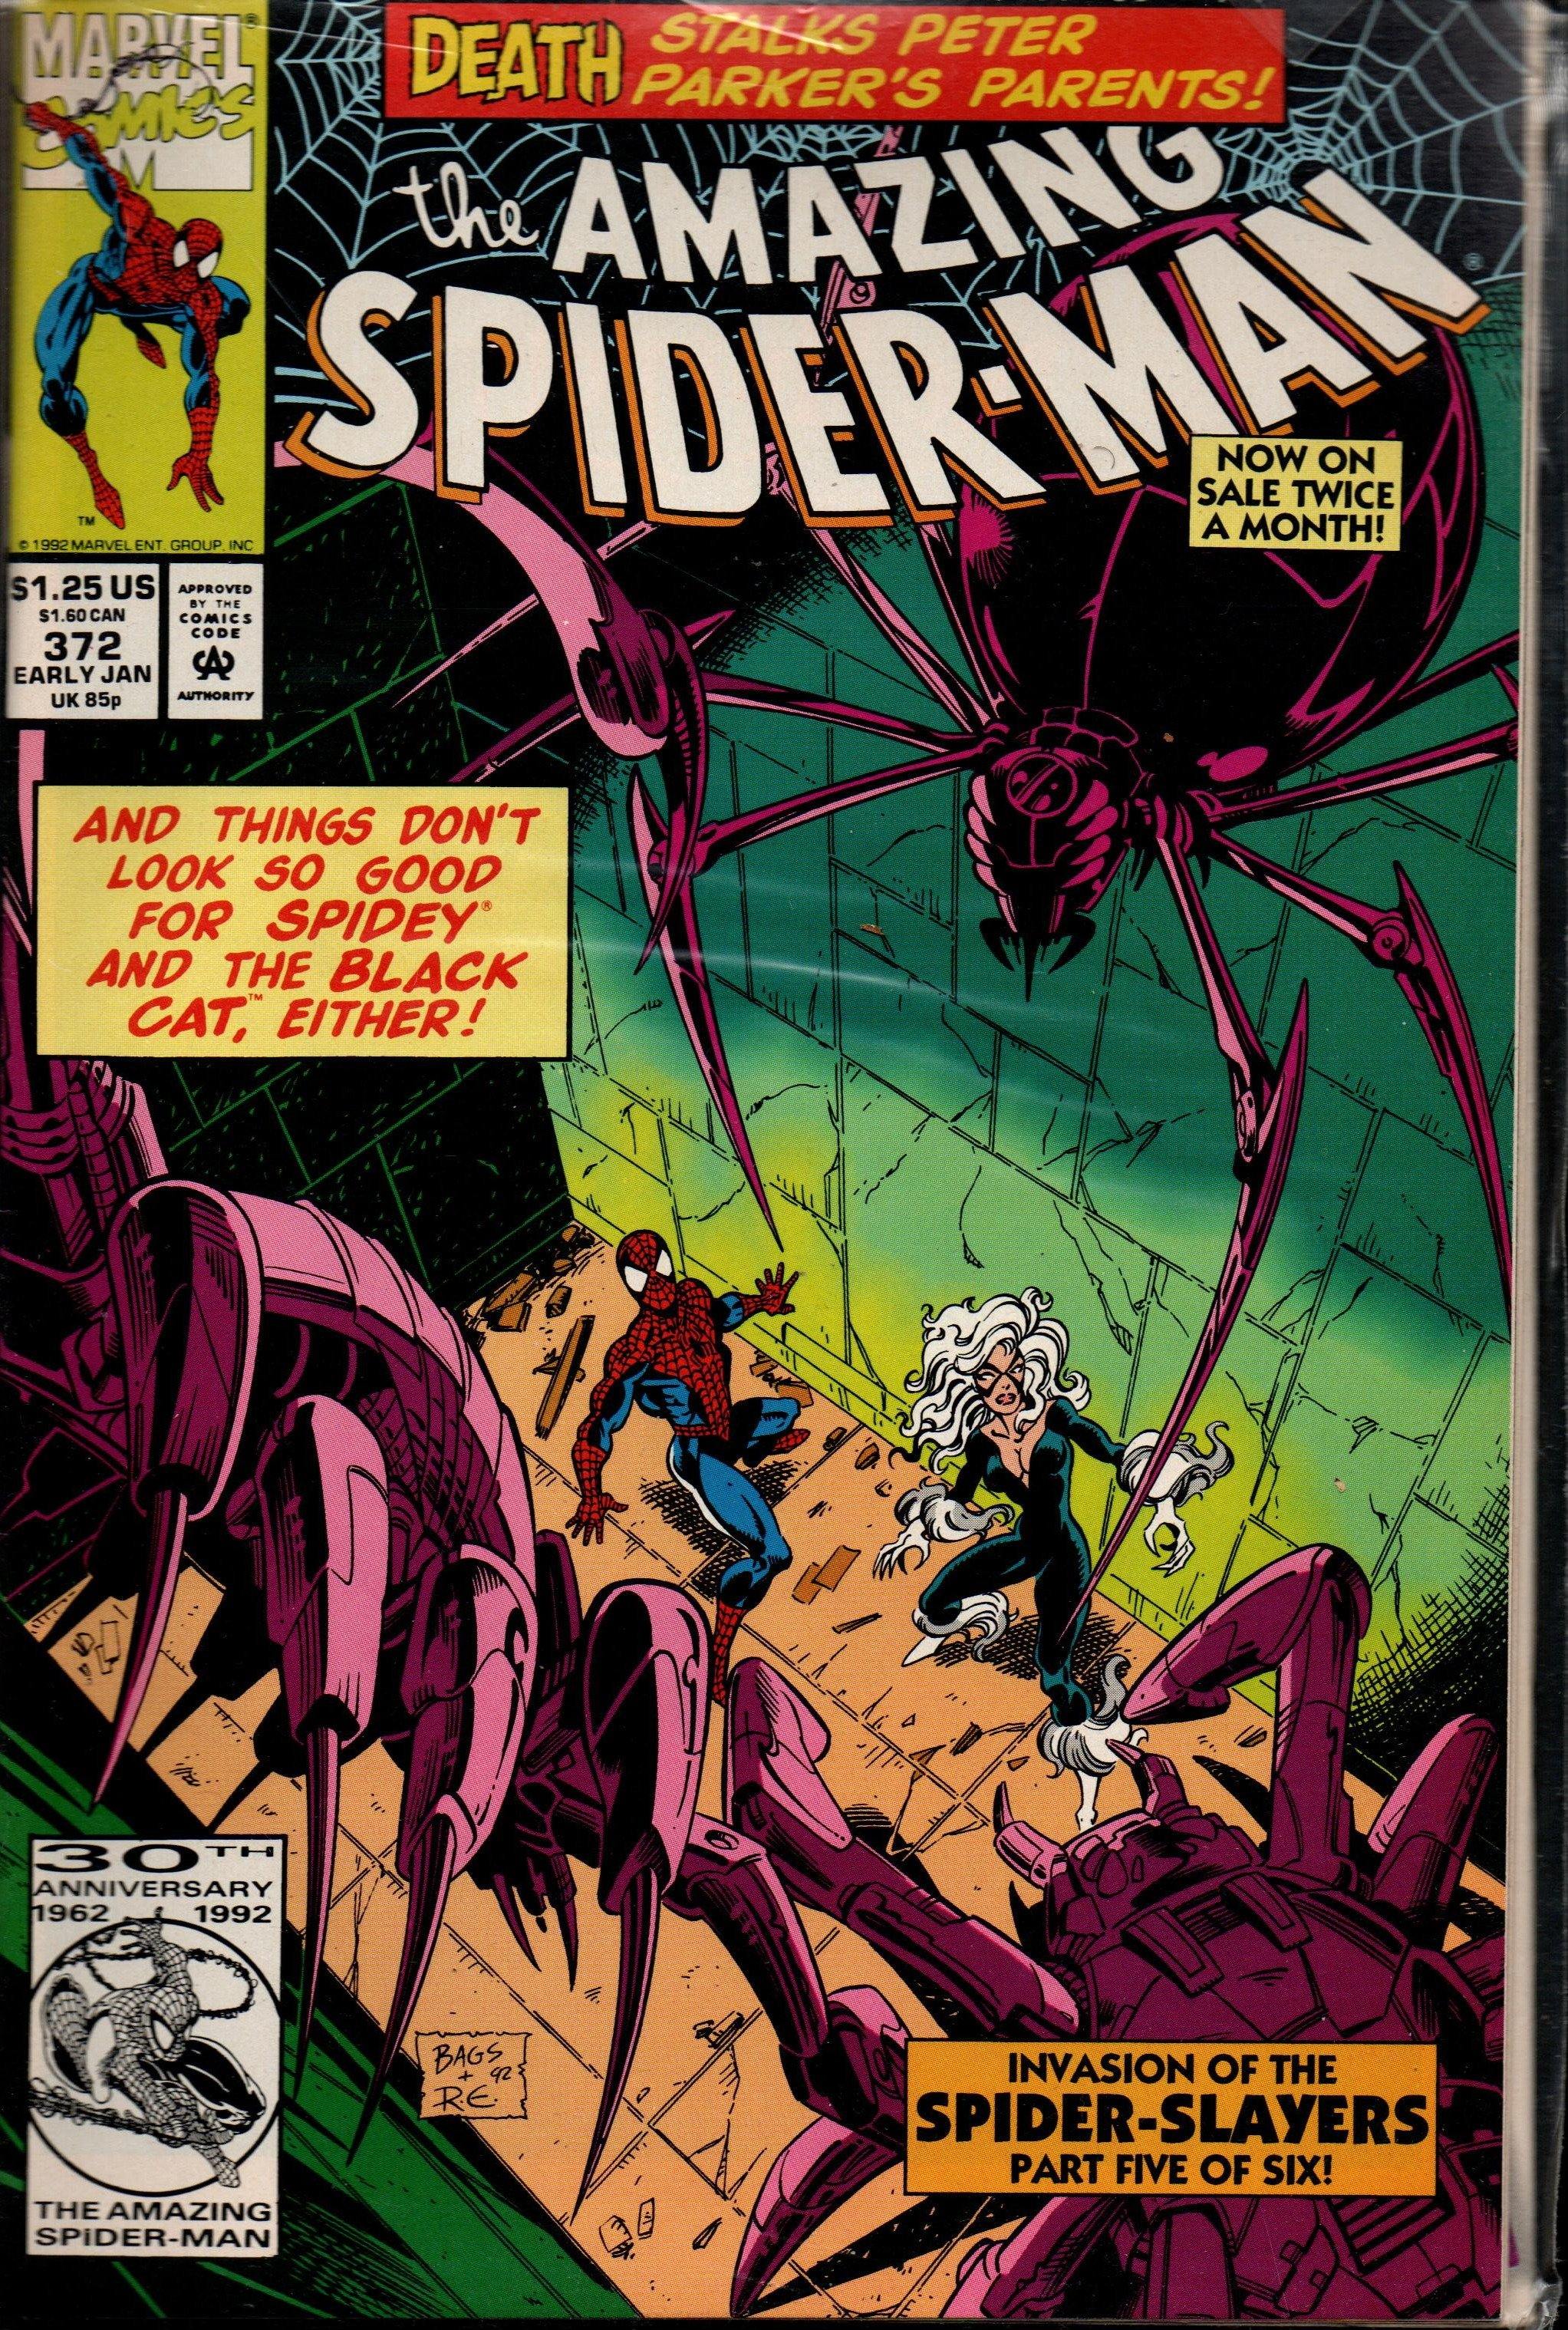 THE AMAZING SPIDER-MAN #372 (1963) JAN 1992